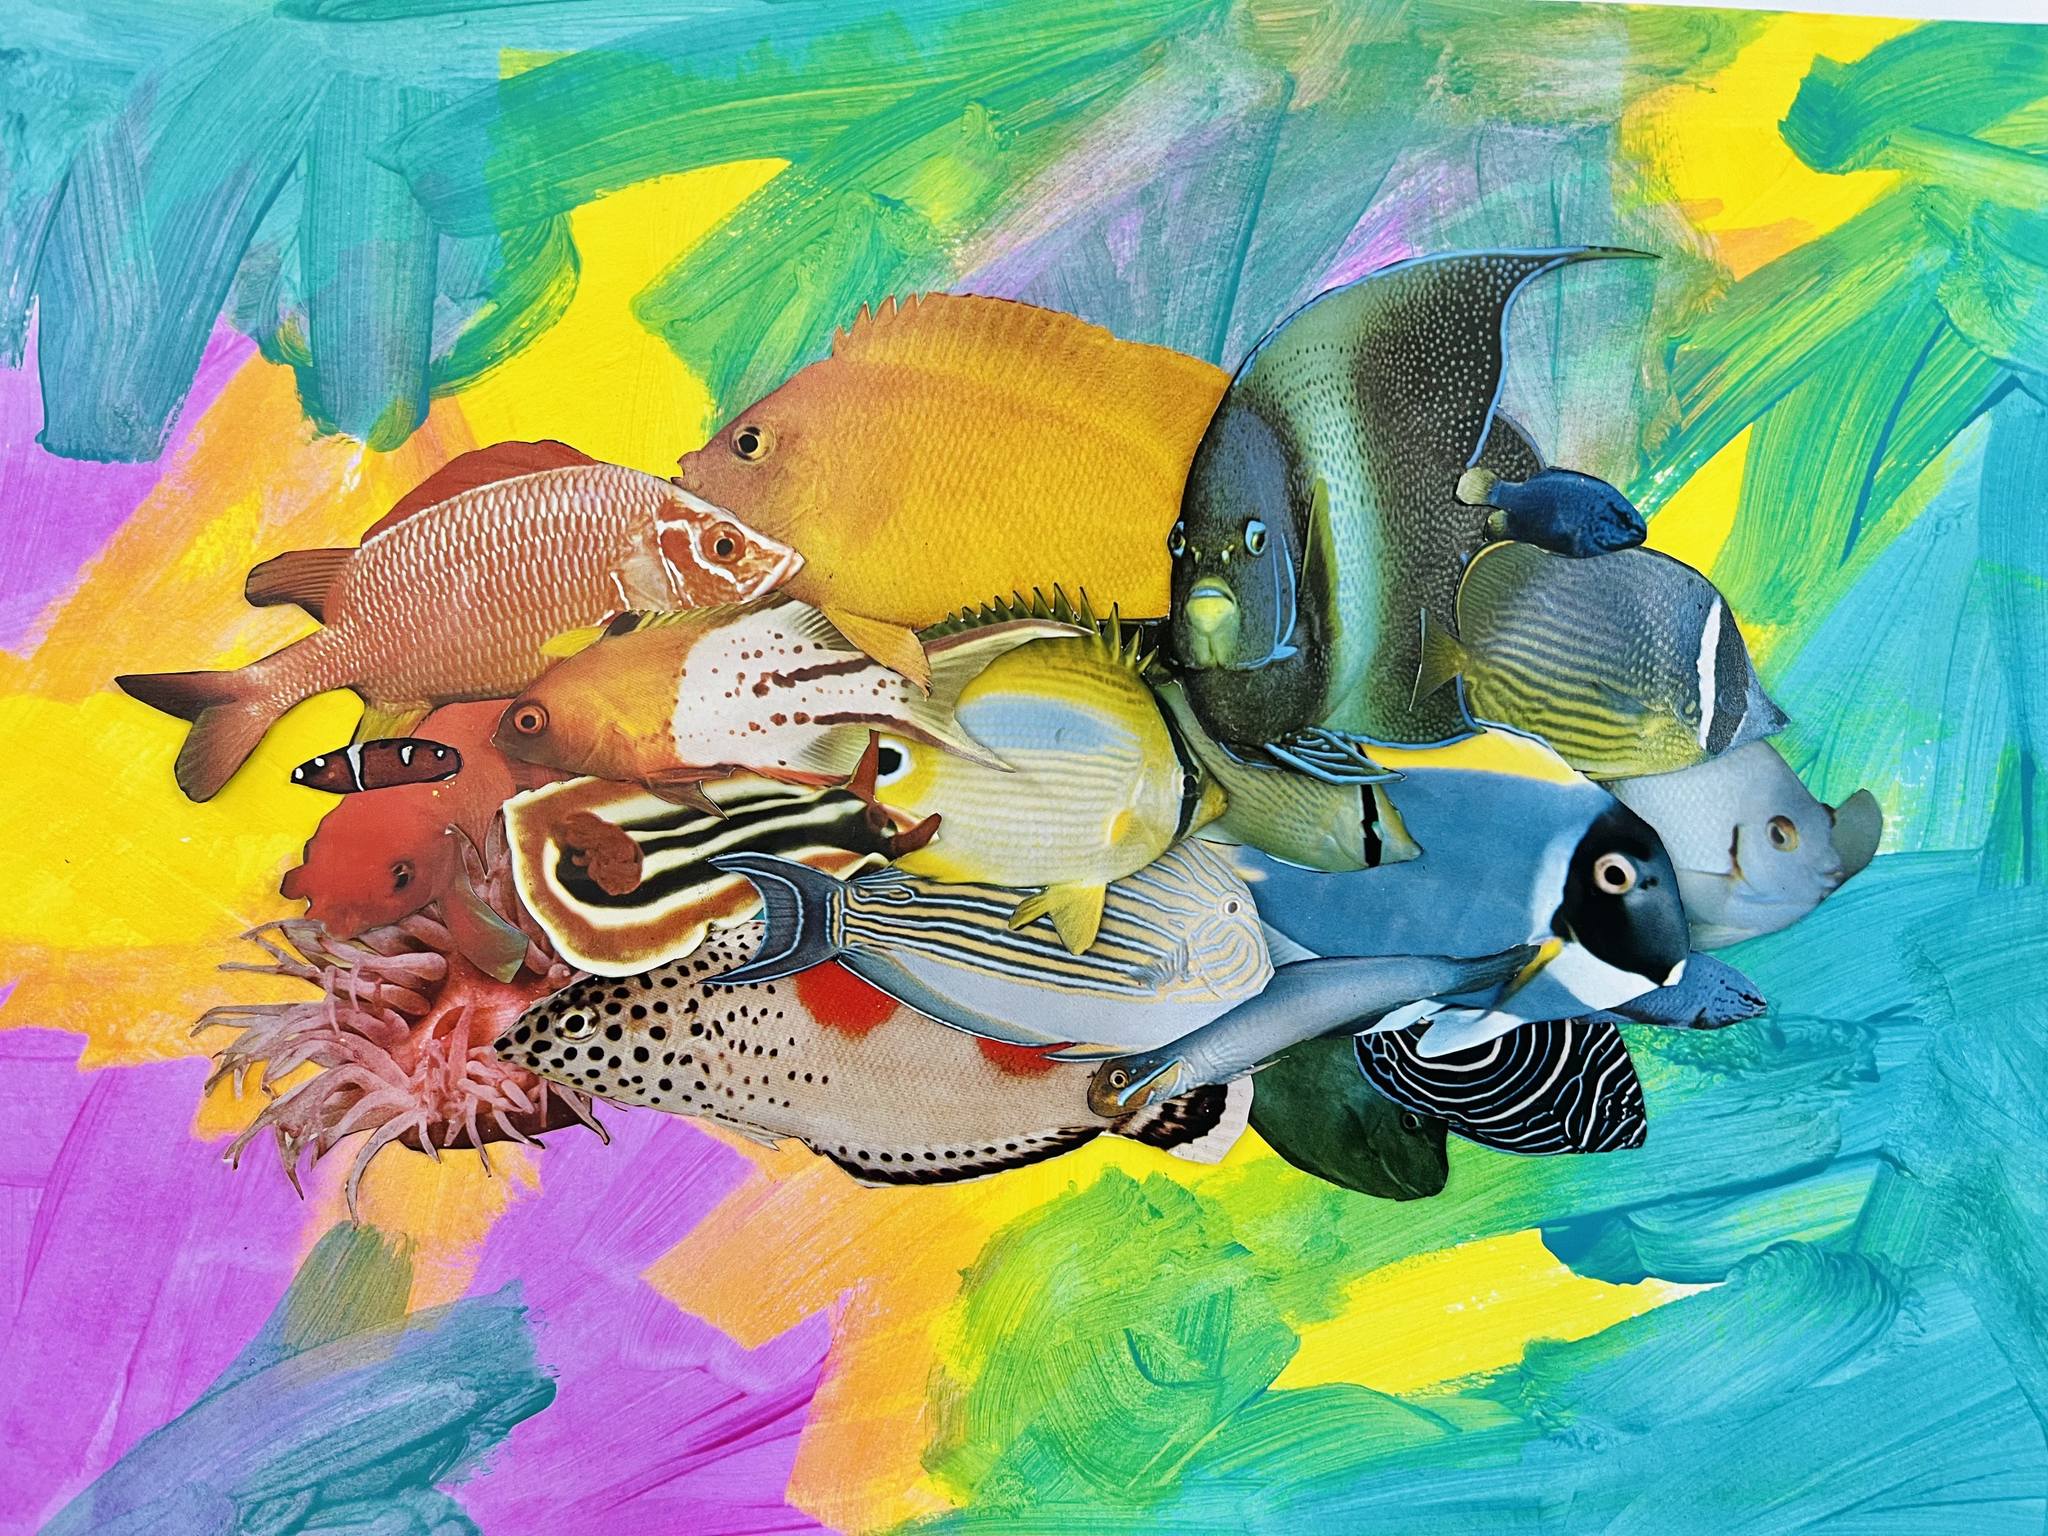 Sunday Jemmott: Diaries of a Rainbow Fish